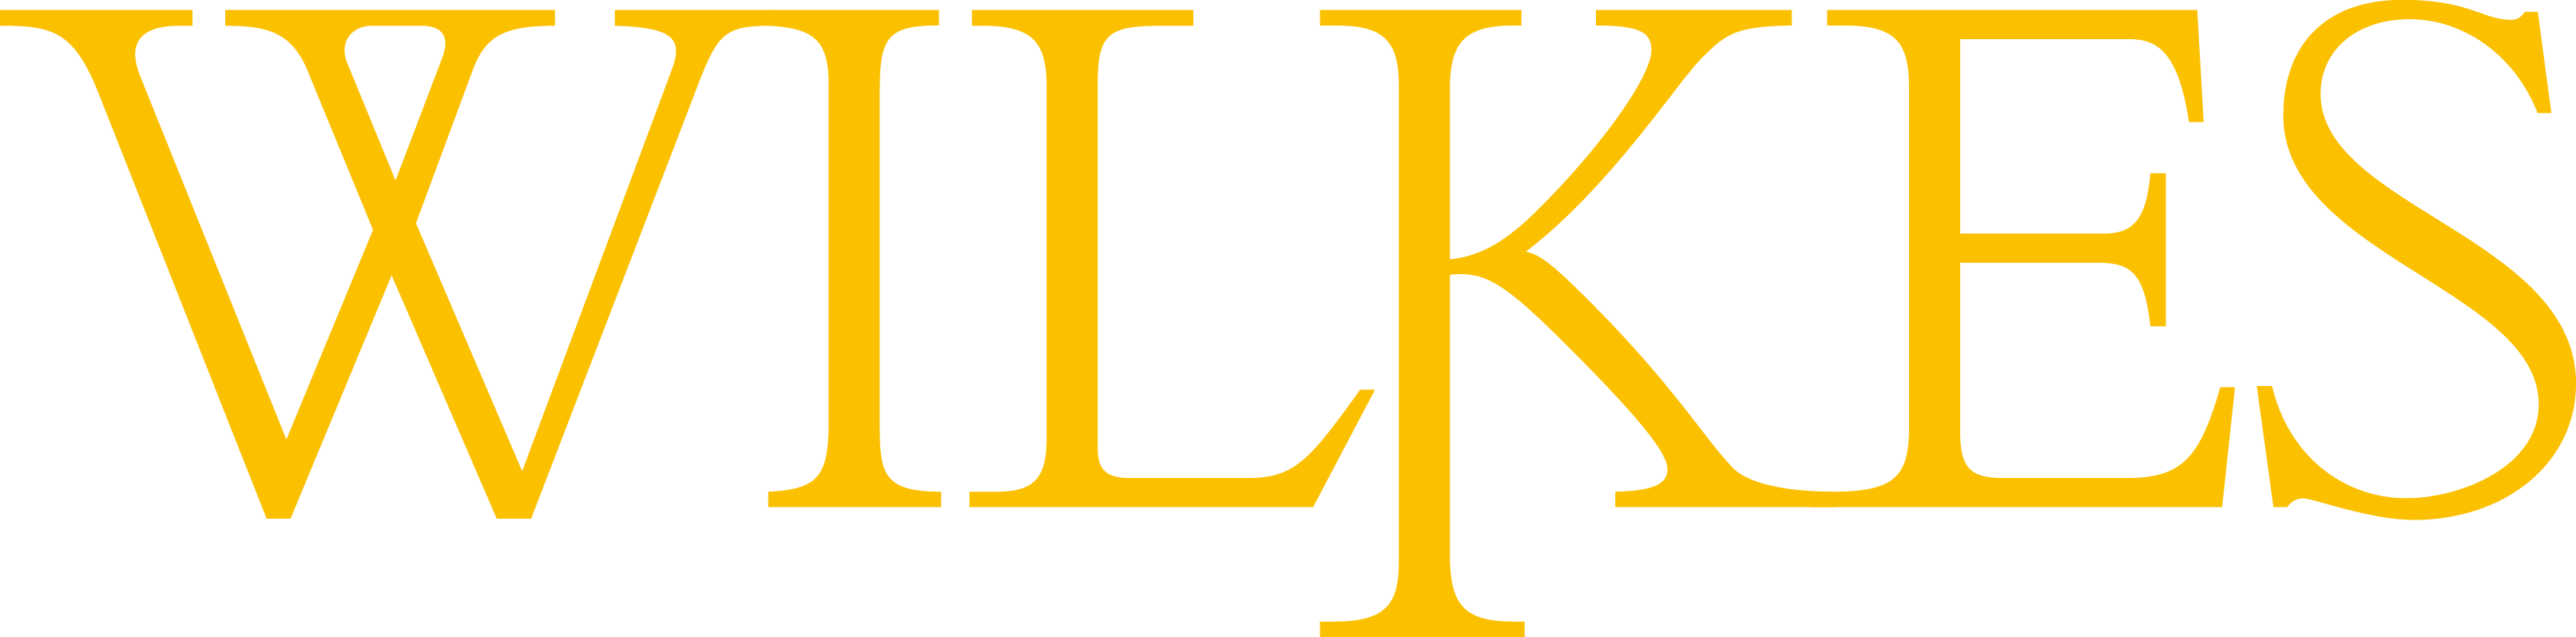 Wilkes Logo yellow